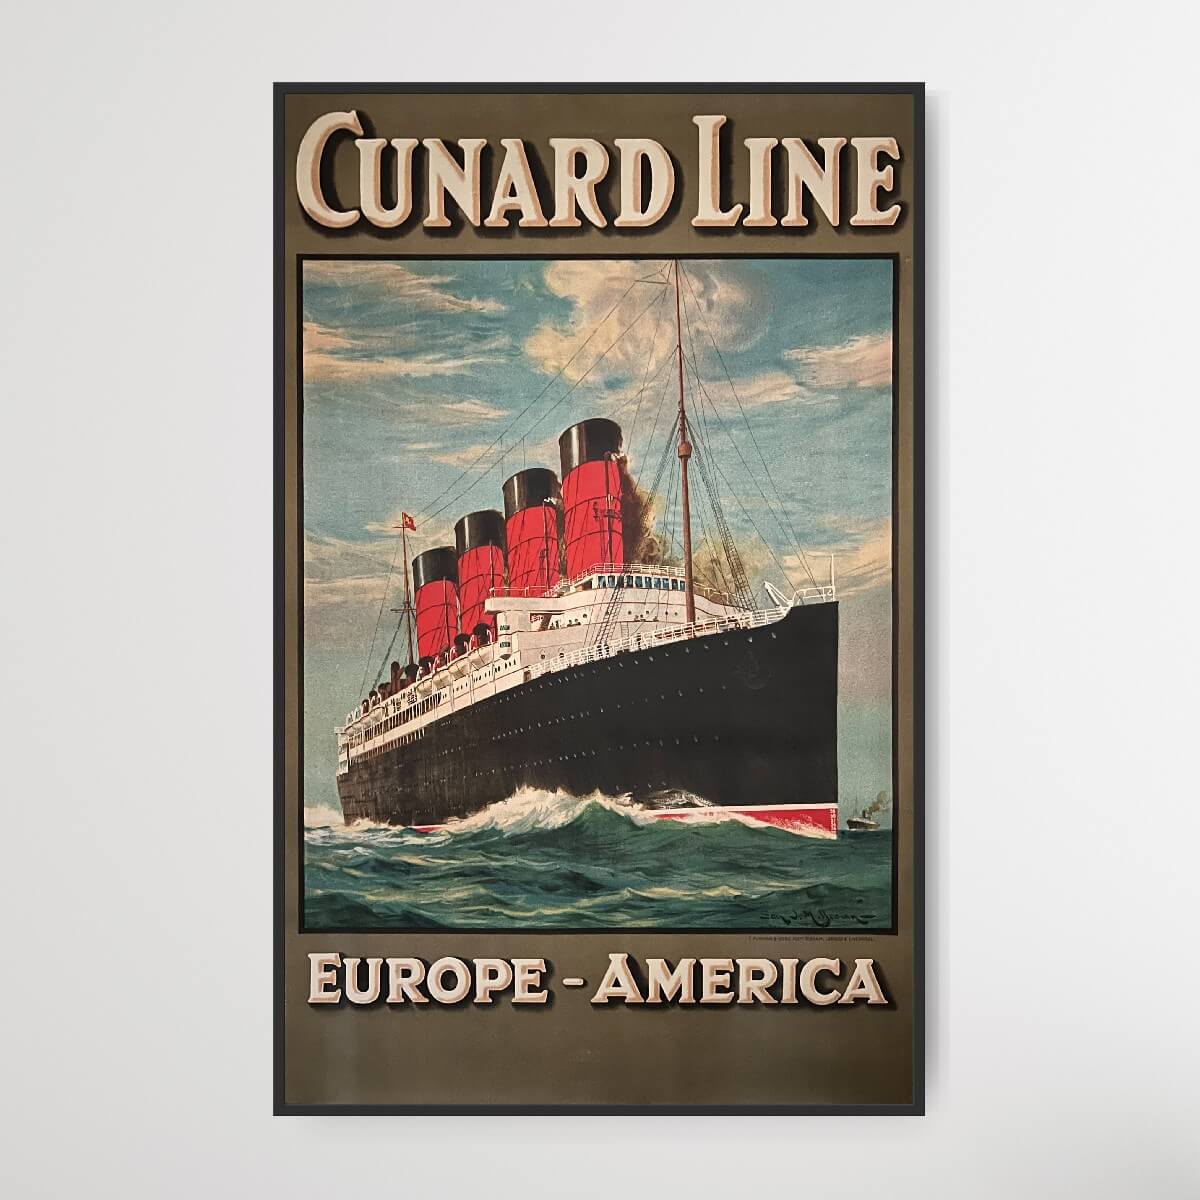 Europa - Amerika | Cunard Line